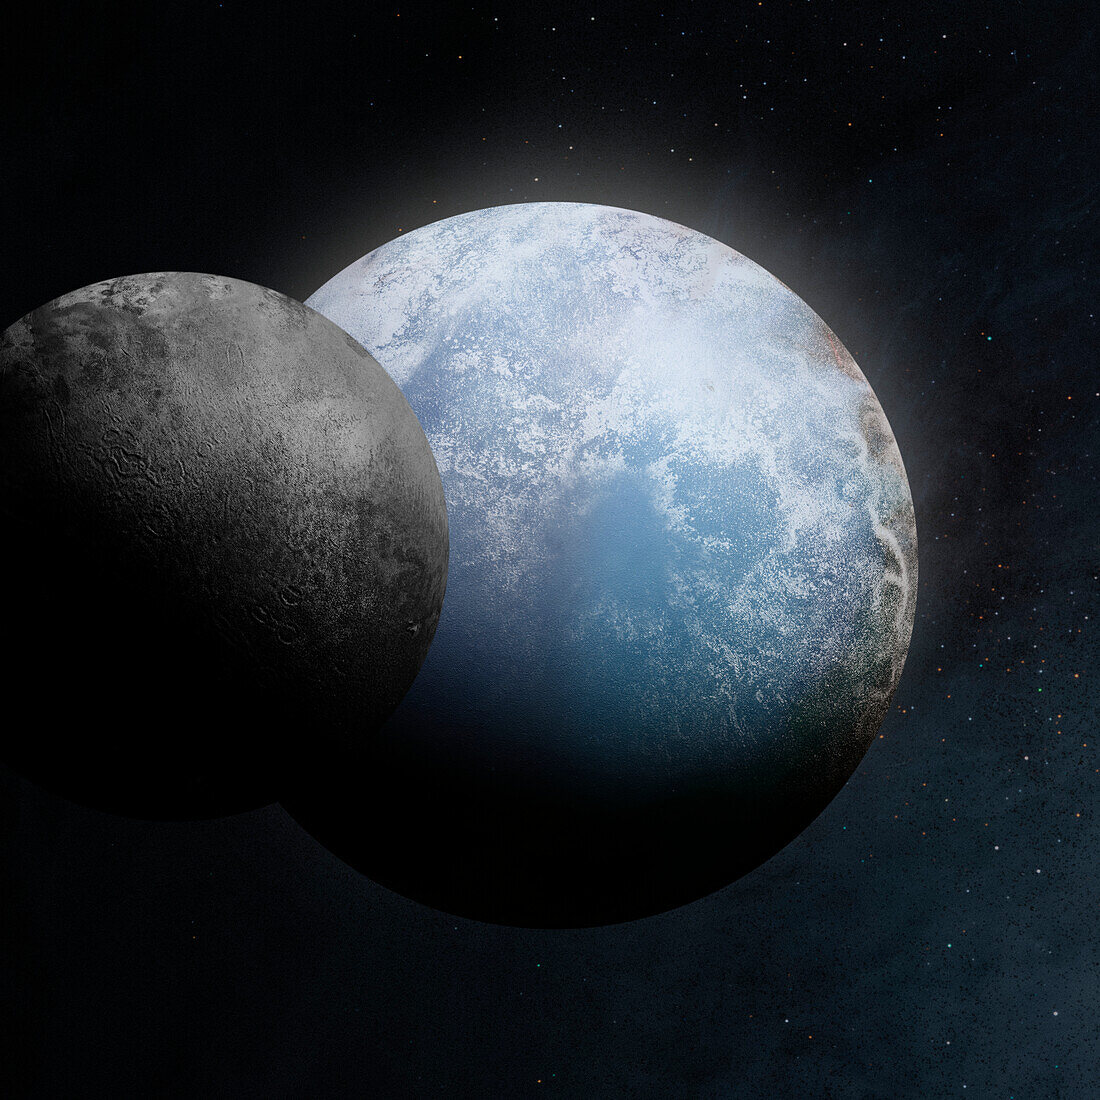 Earth-like waterworld with barren moon, composite image